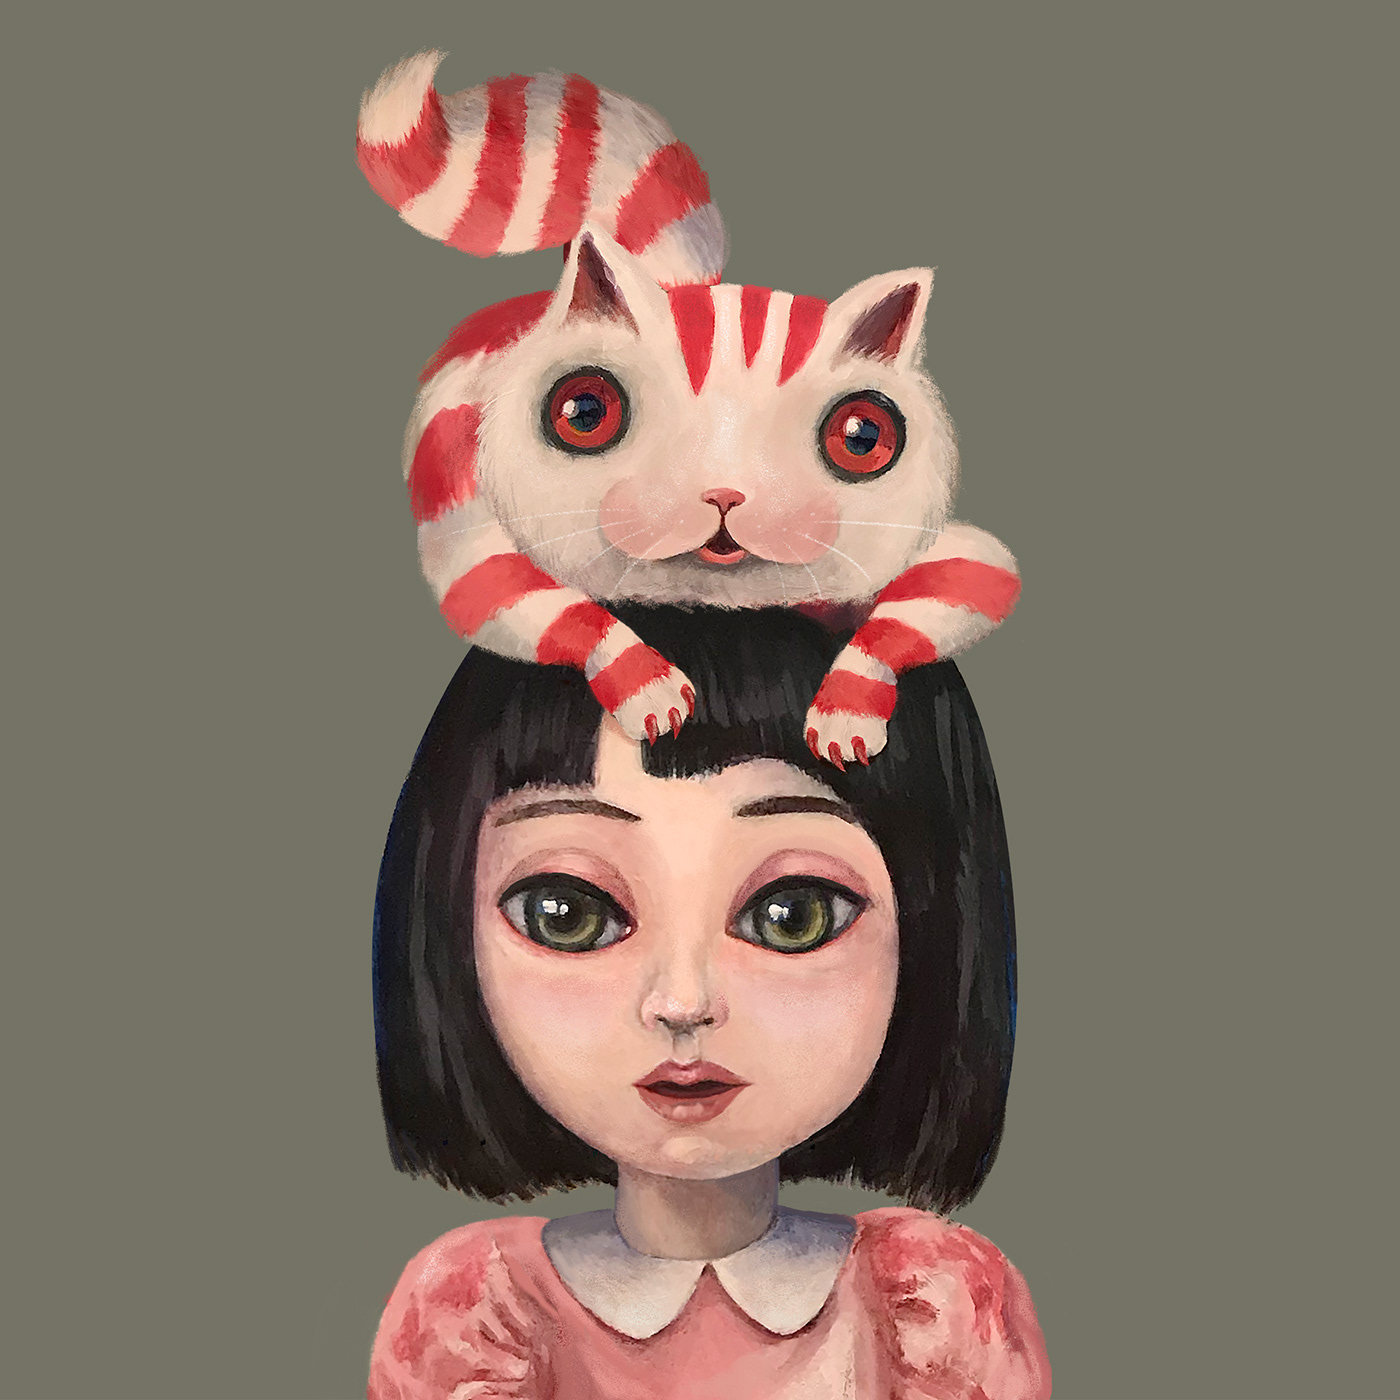 art creepy cute dolls ILLUSTRATION  little girl pop surrealism fairytale